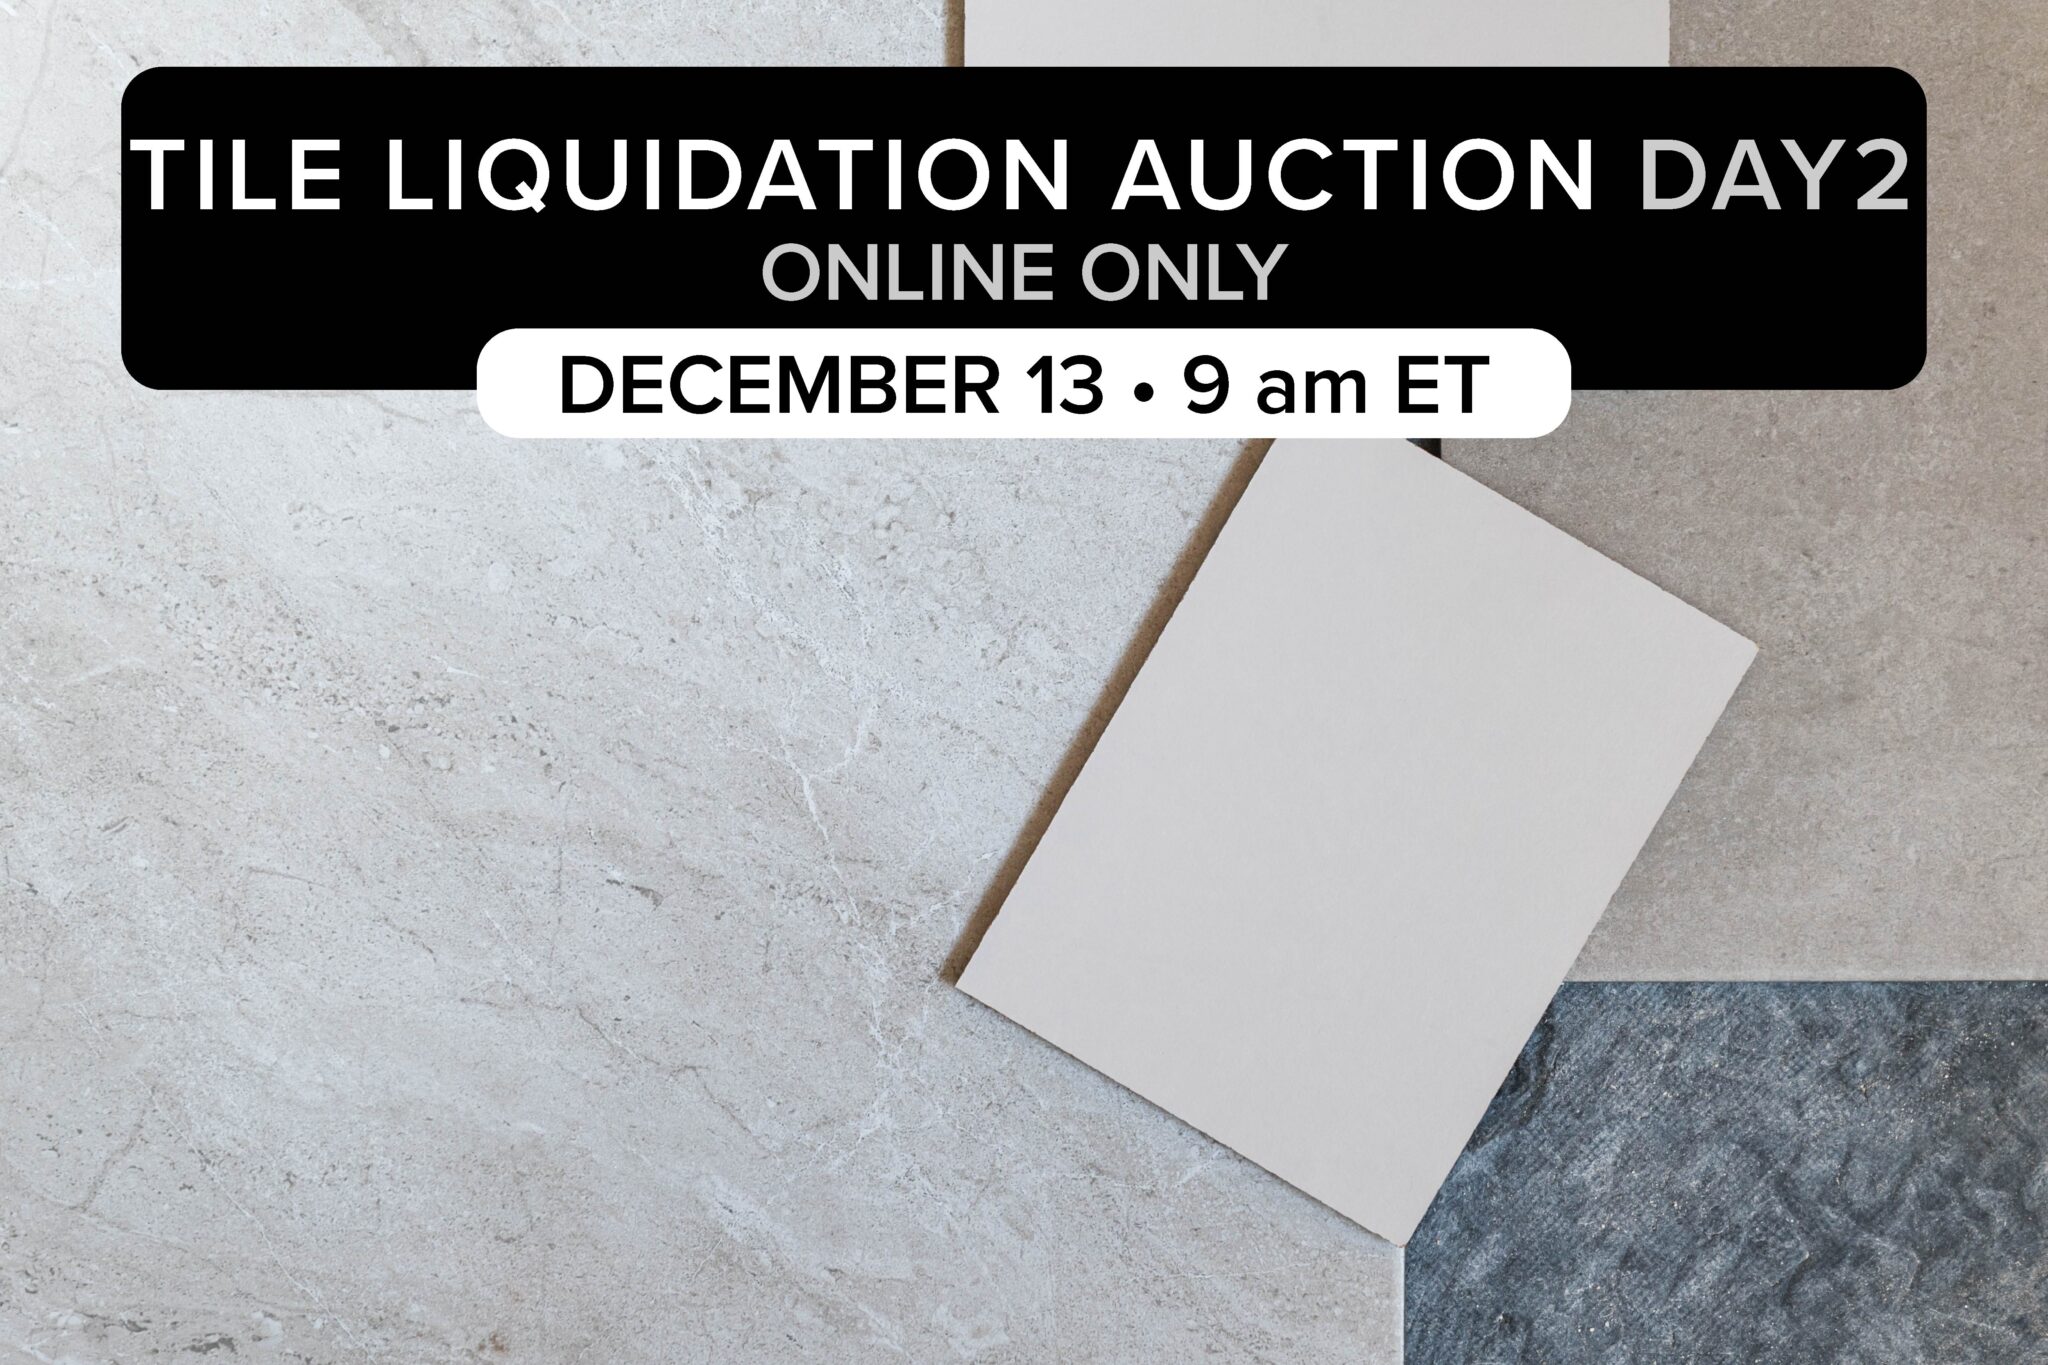 Tile Liquidation Auction: Day 2